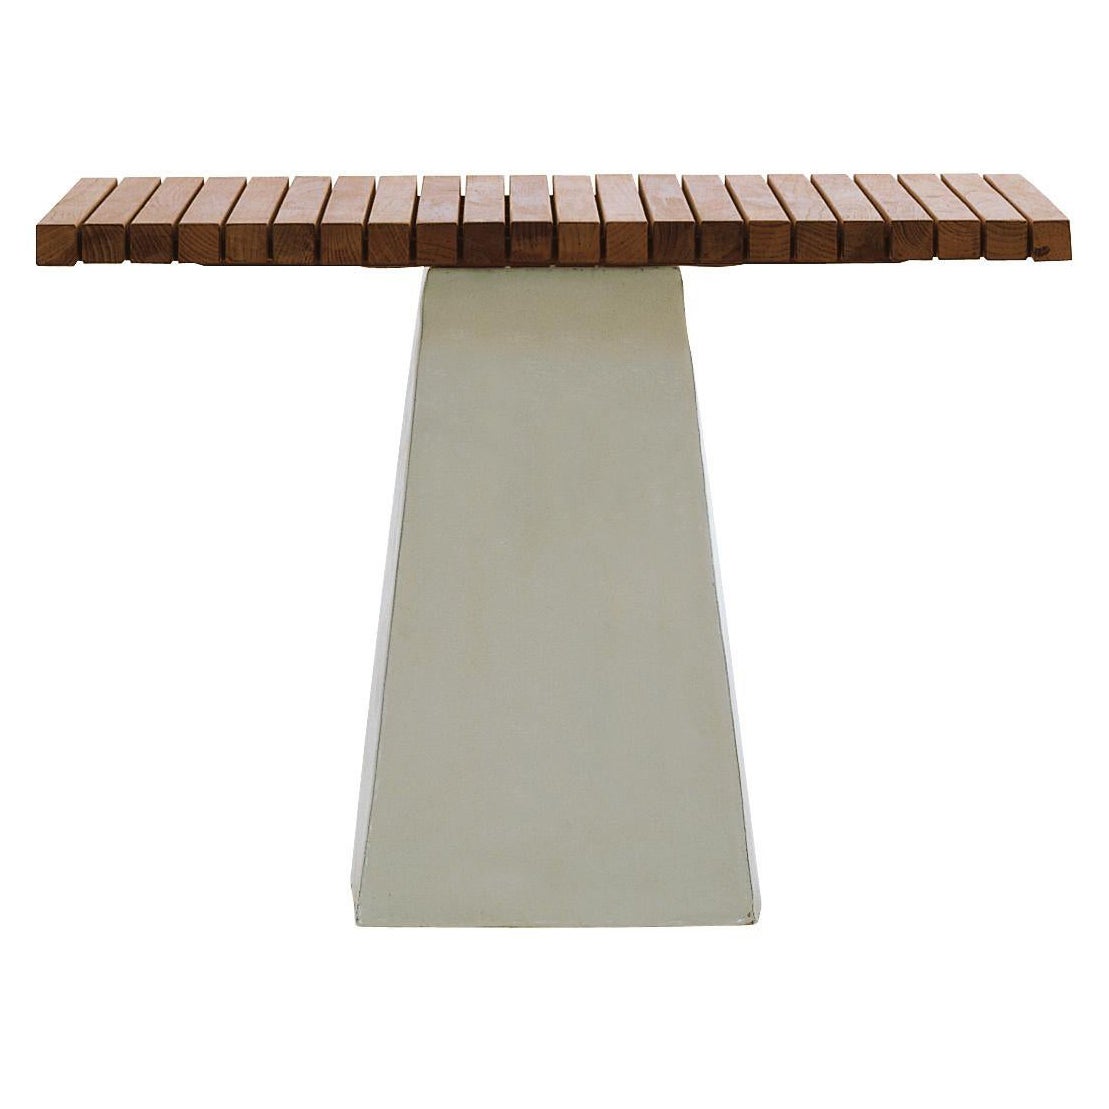 Gervasoni Large Inout 35 Table in Natural Teak Slats Top with White Ceramic Base